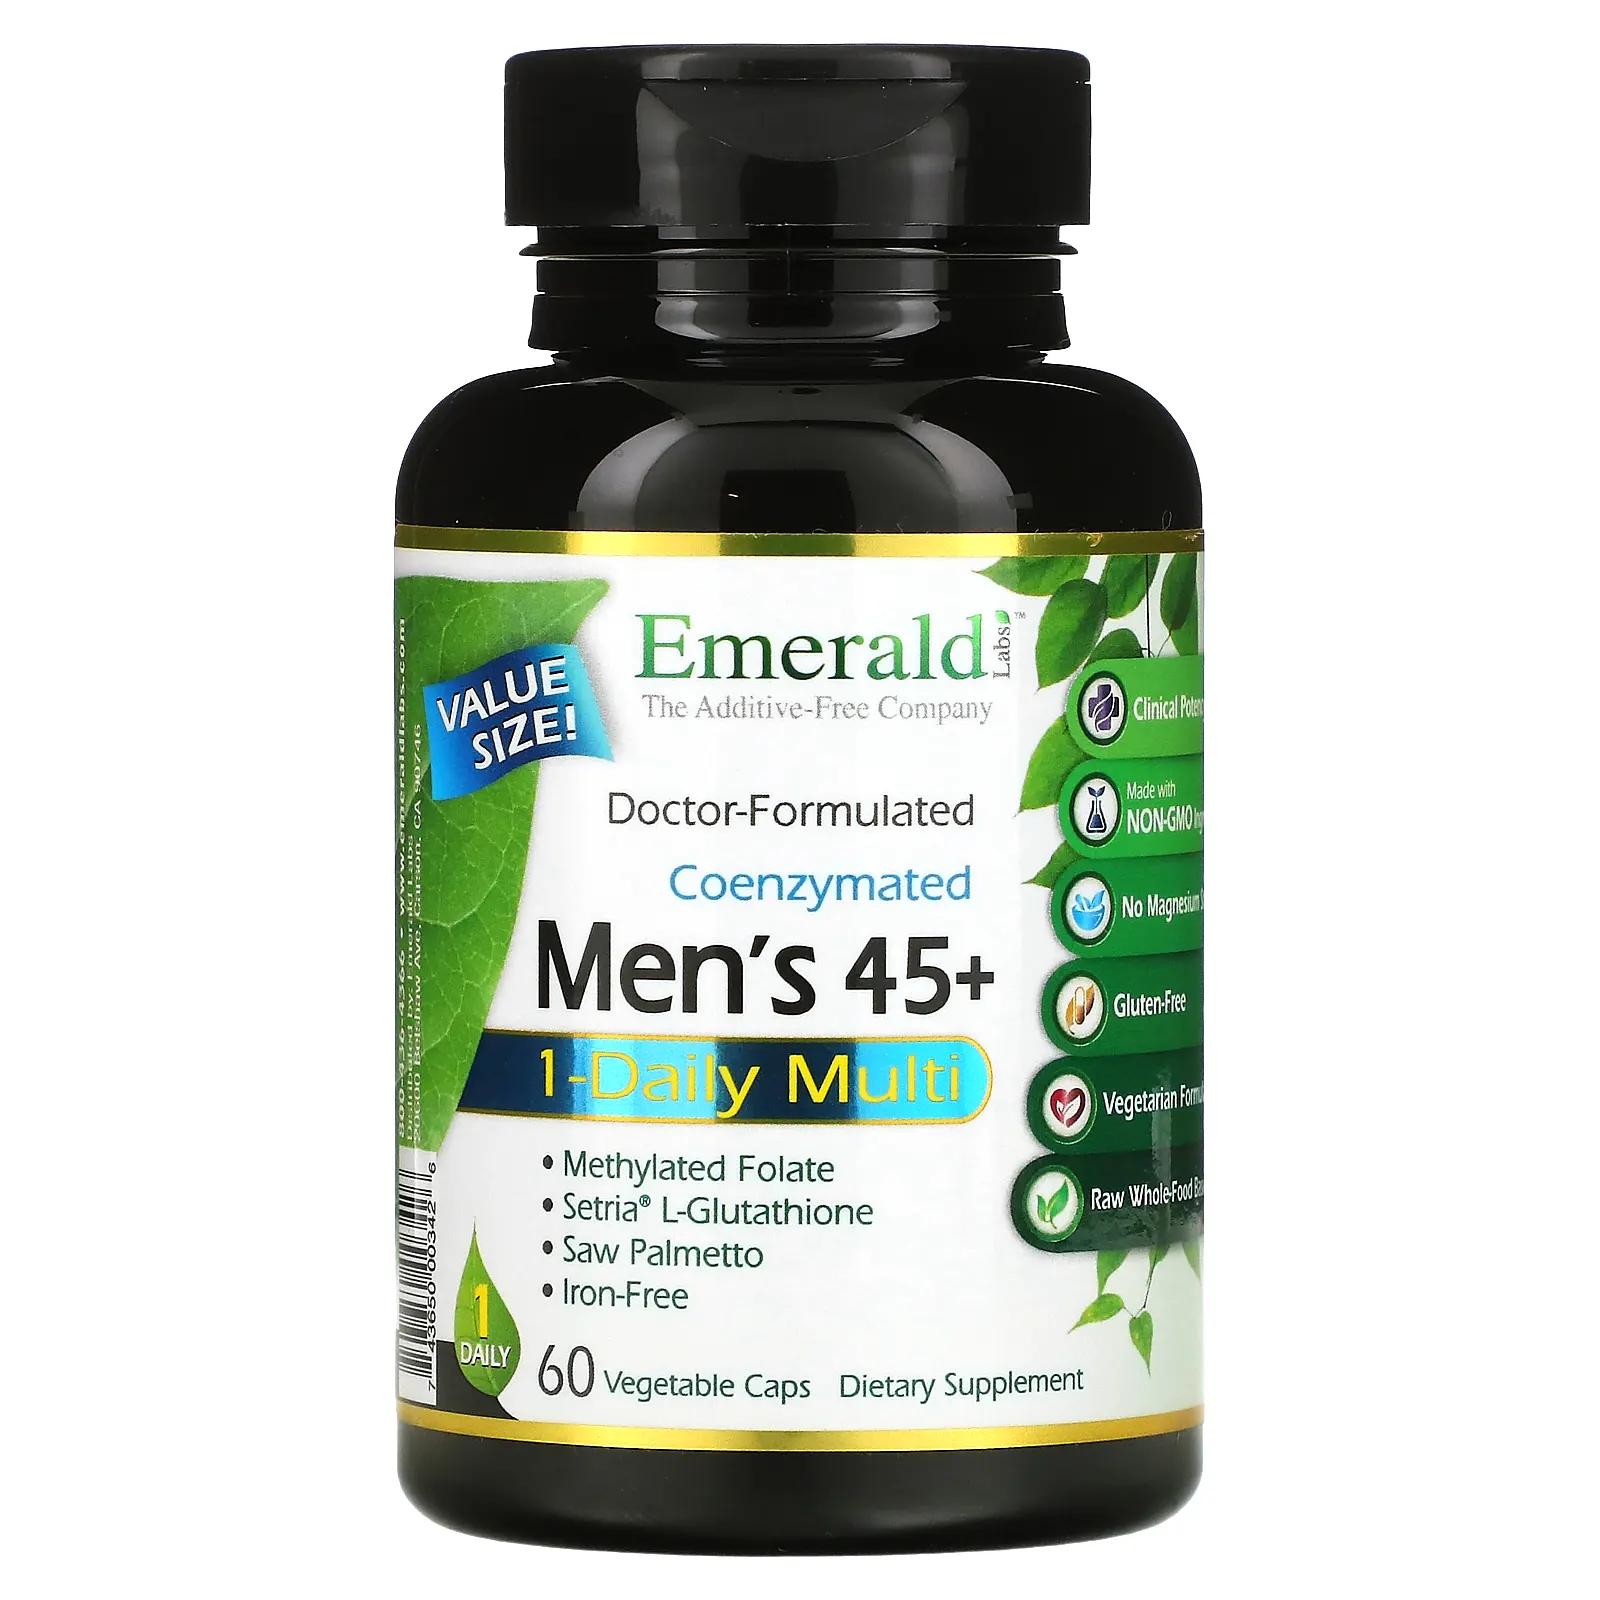 Emerald Laboratories Coenzymated Men's 45+ 1-Daily Multi 60 Vegetable Caps цена и фото